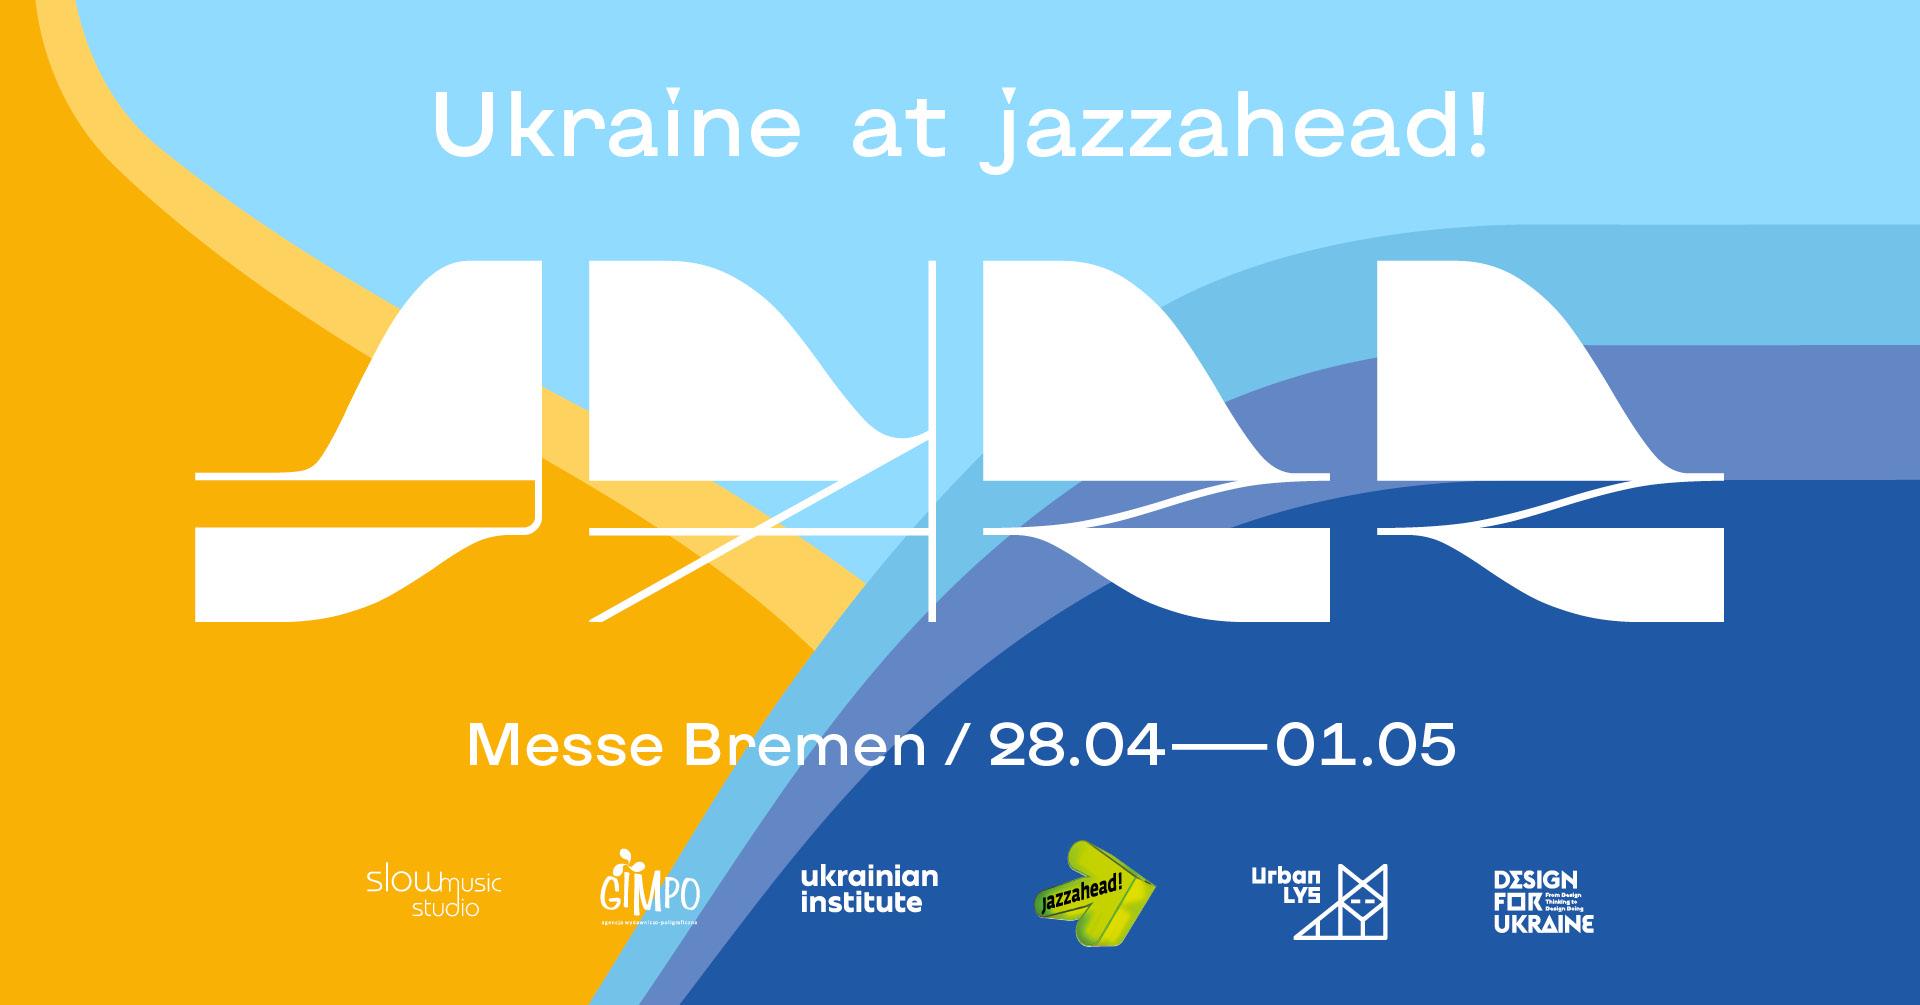 Ukraine at the international jazz showcase festival jazzahead! 2022